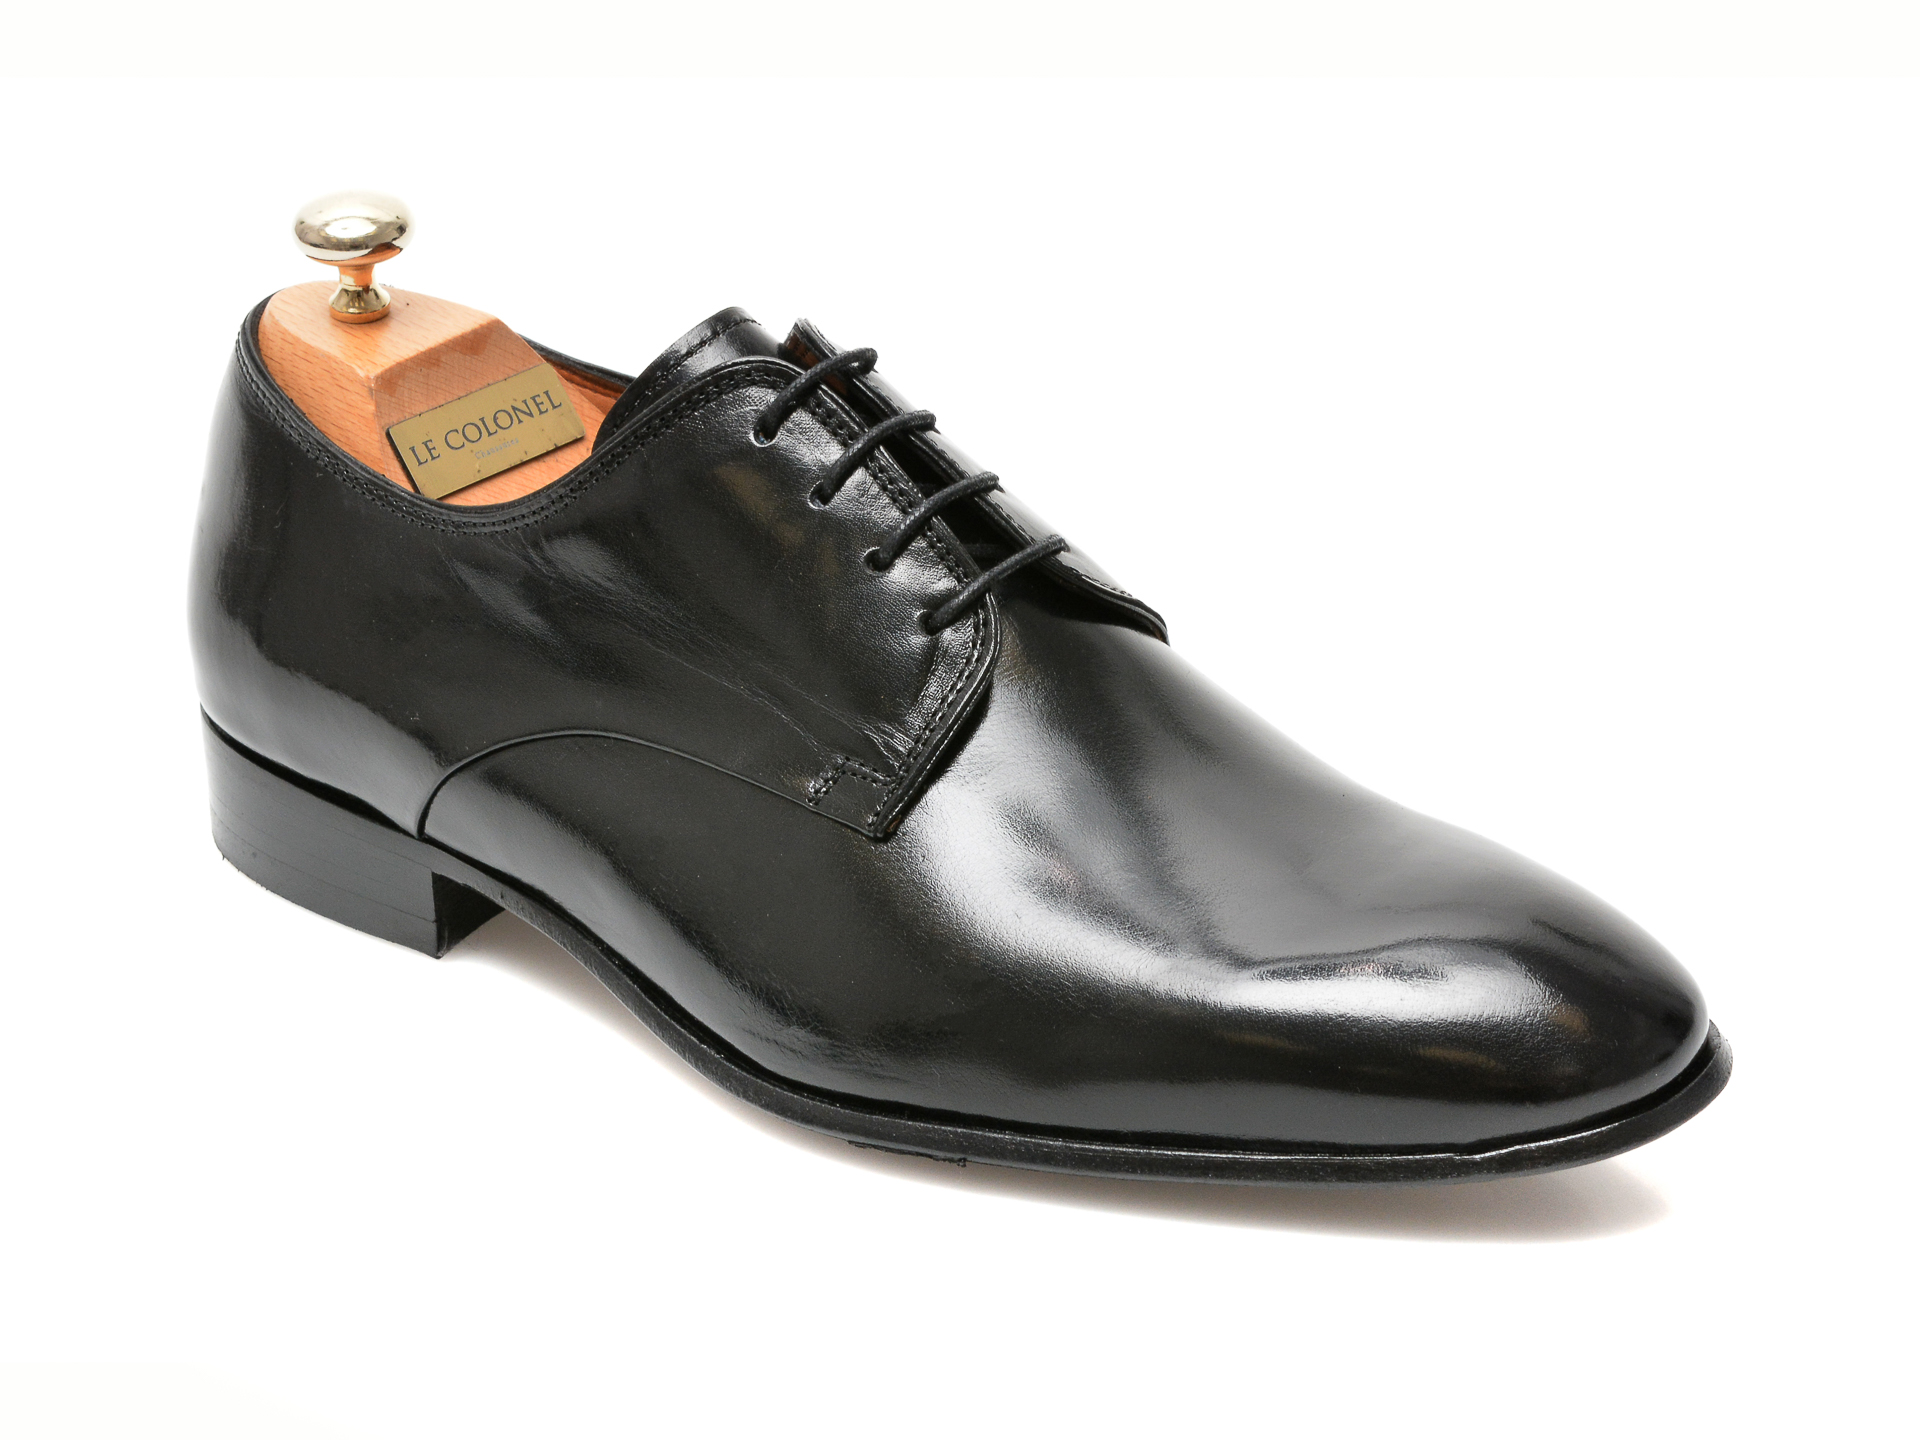 Pantofi LE COLONEL negri, 49817, din piele naturala